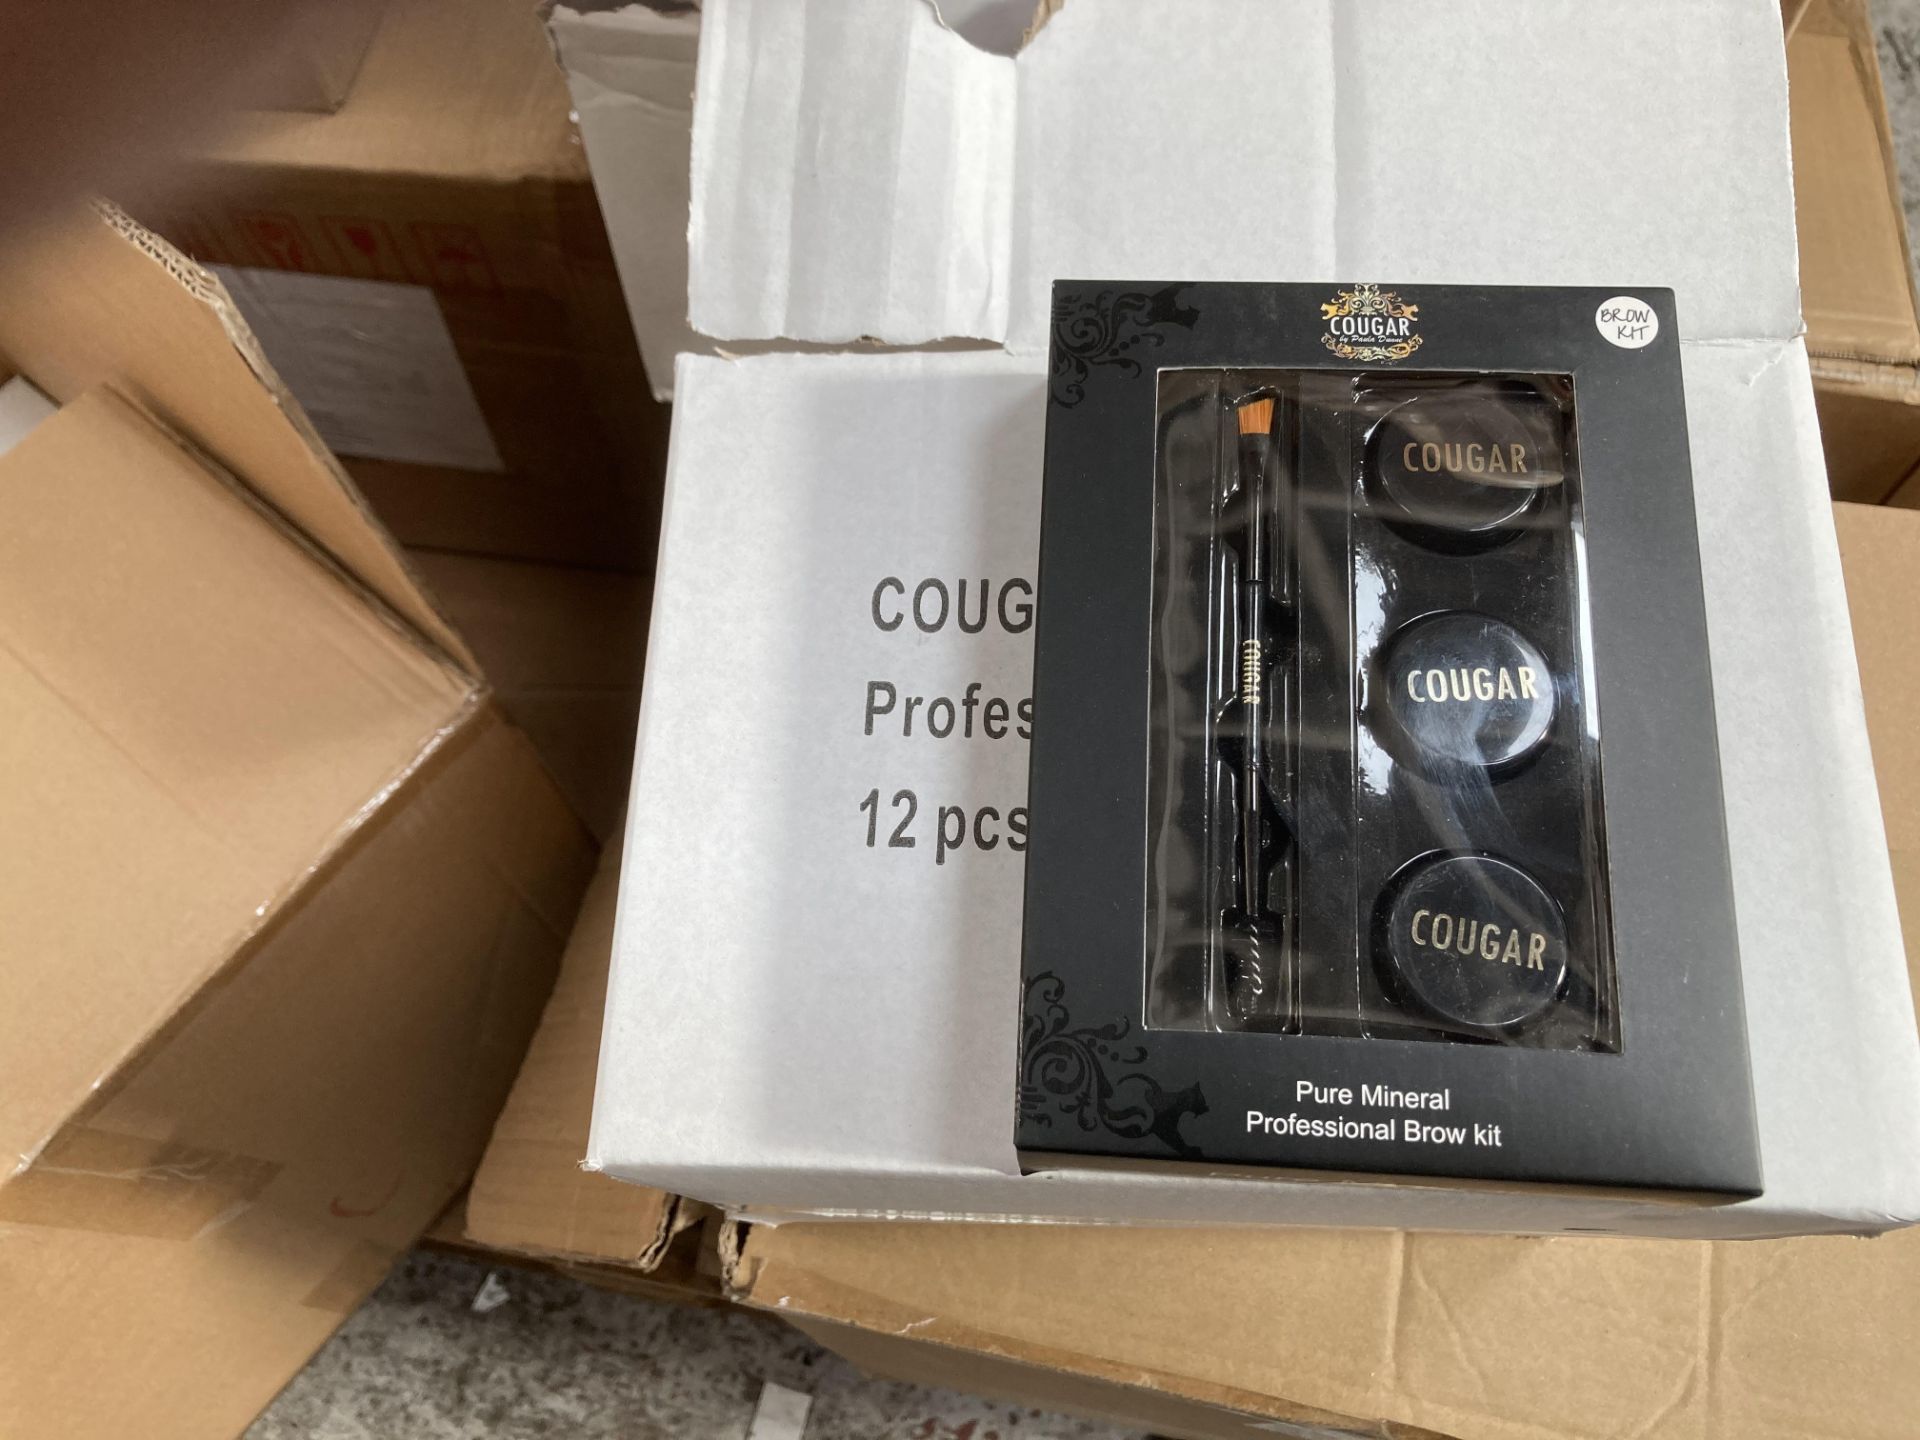 One box of Cougar Professional Brow Kits (12 units per box)